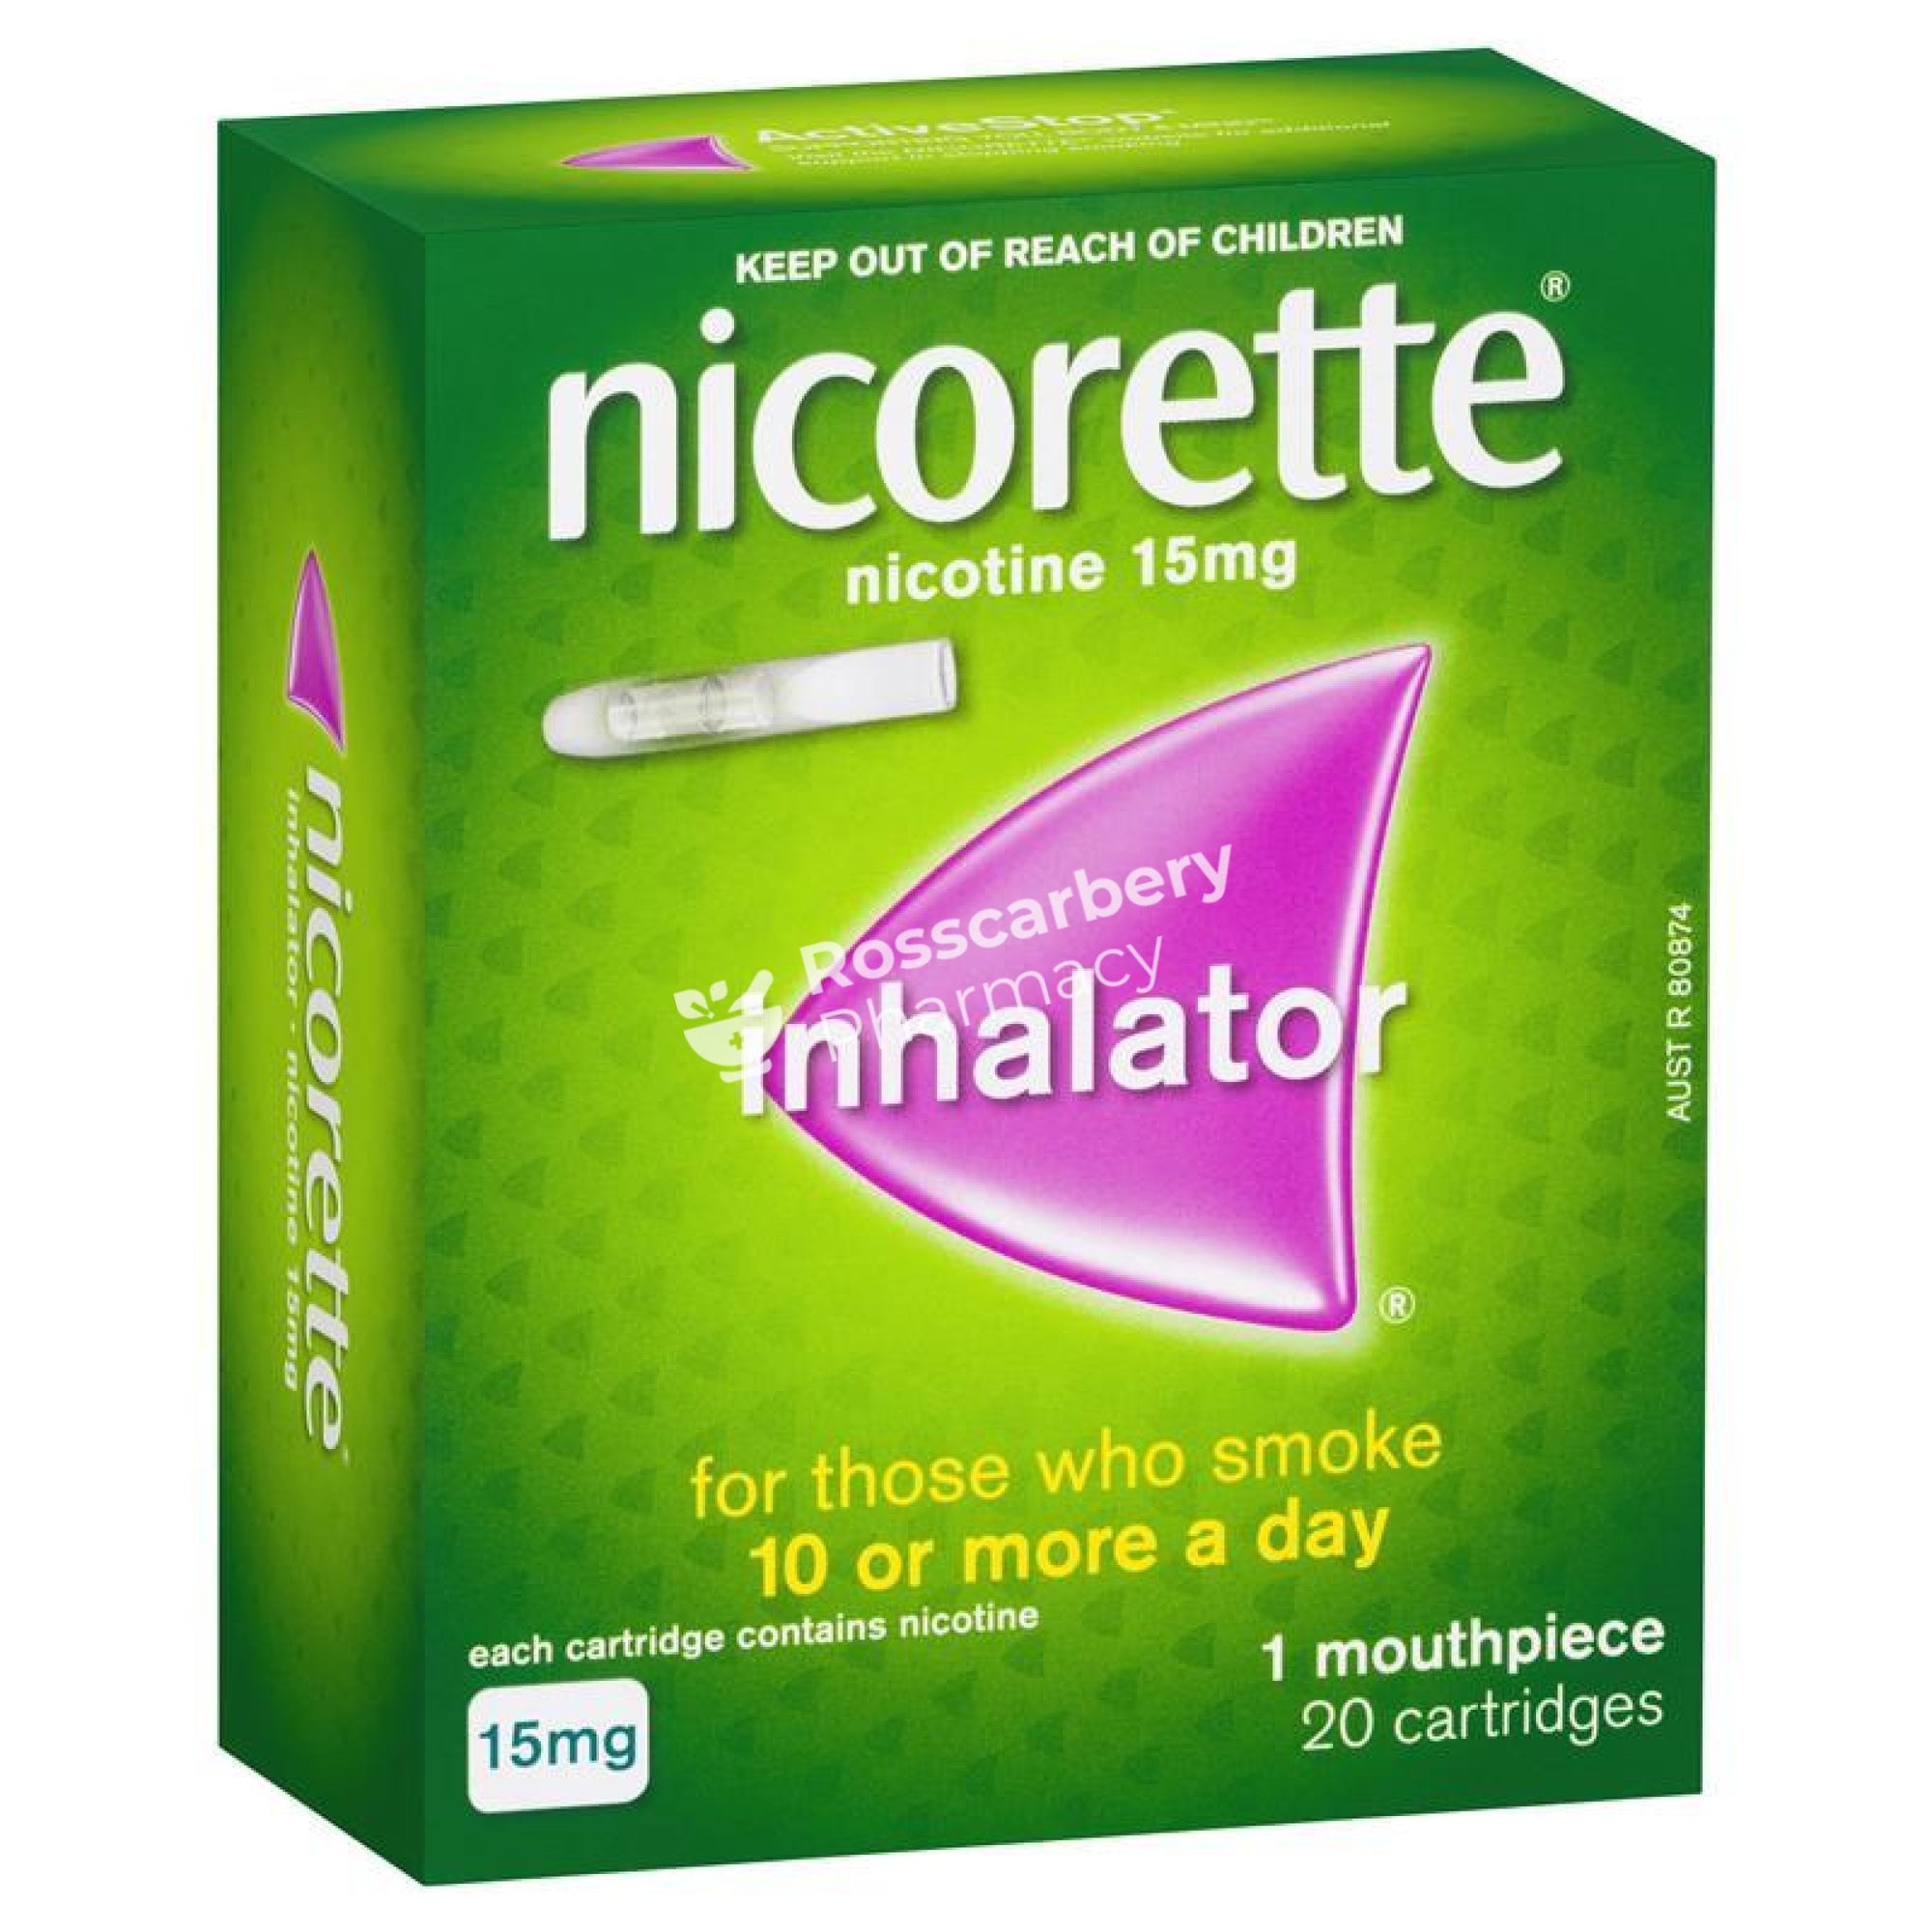 Nicorette 15Mg Refill Inhaler - 20 Cartridges Nicotine